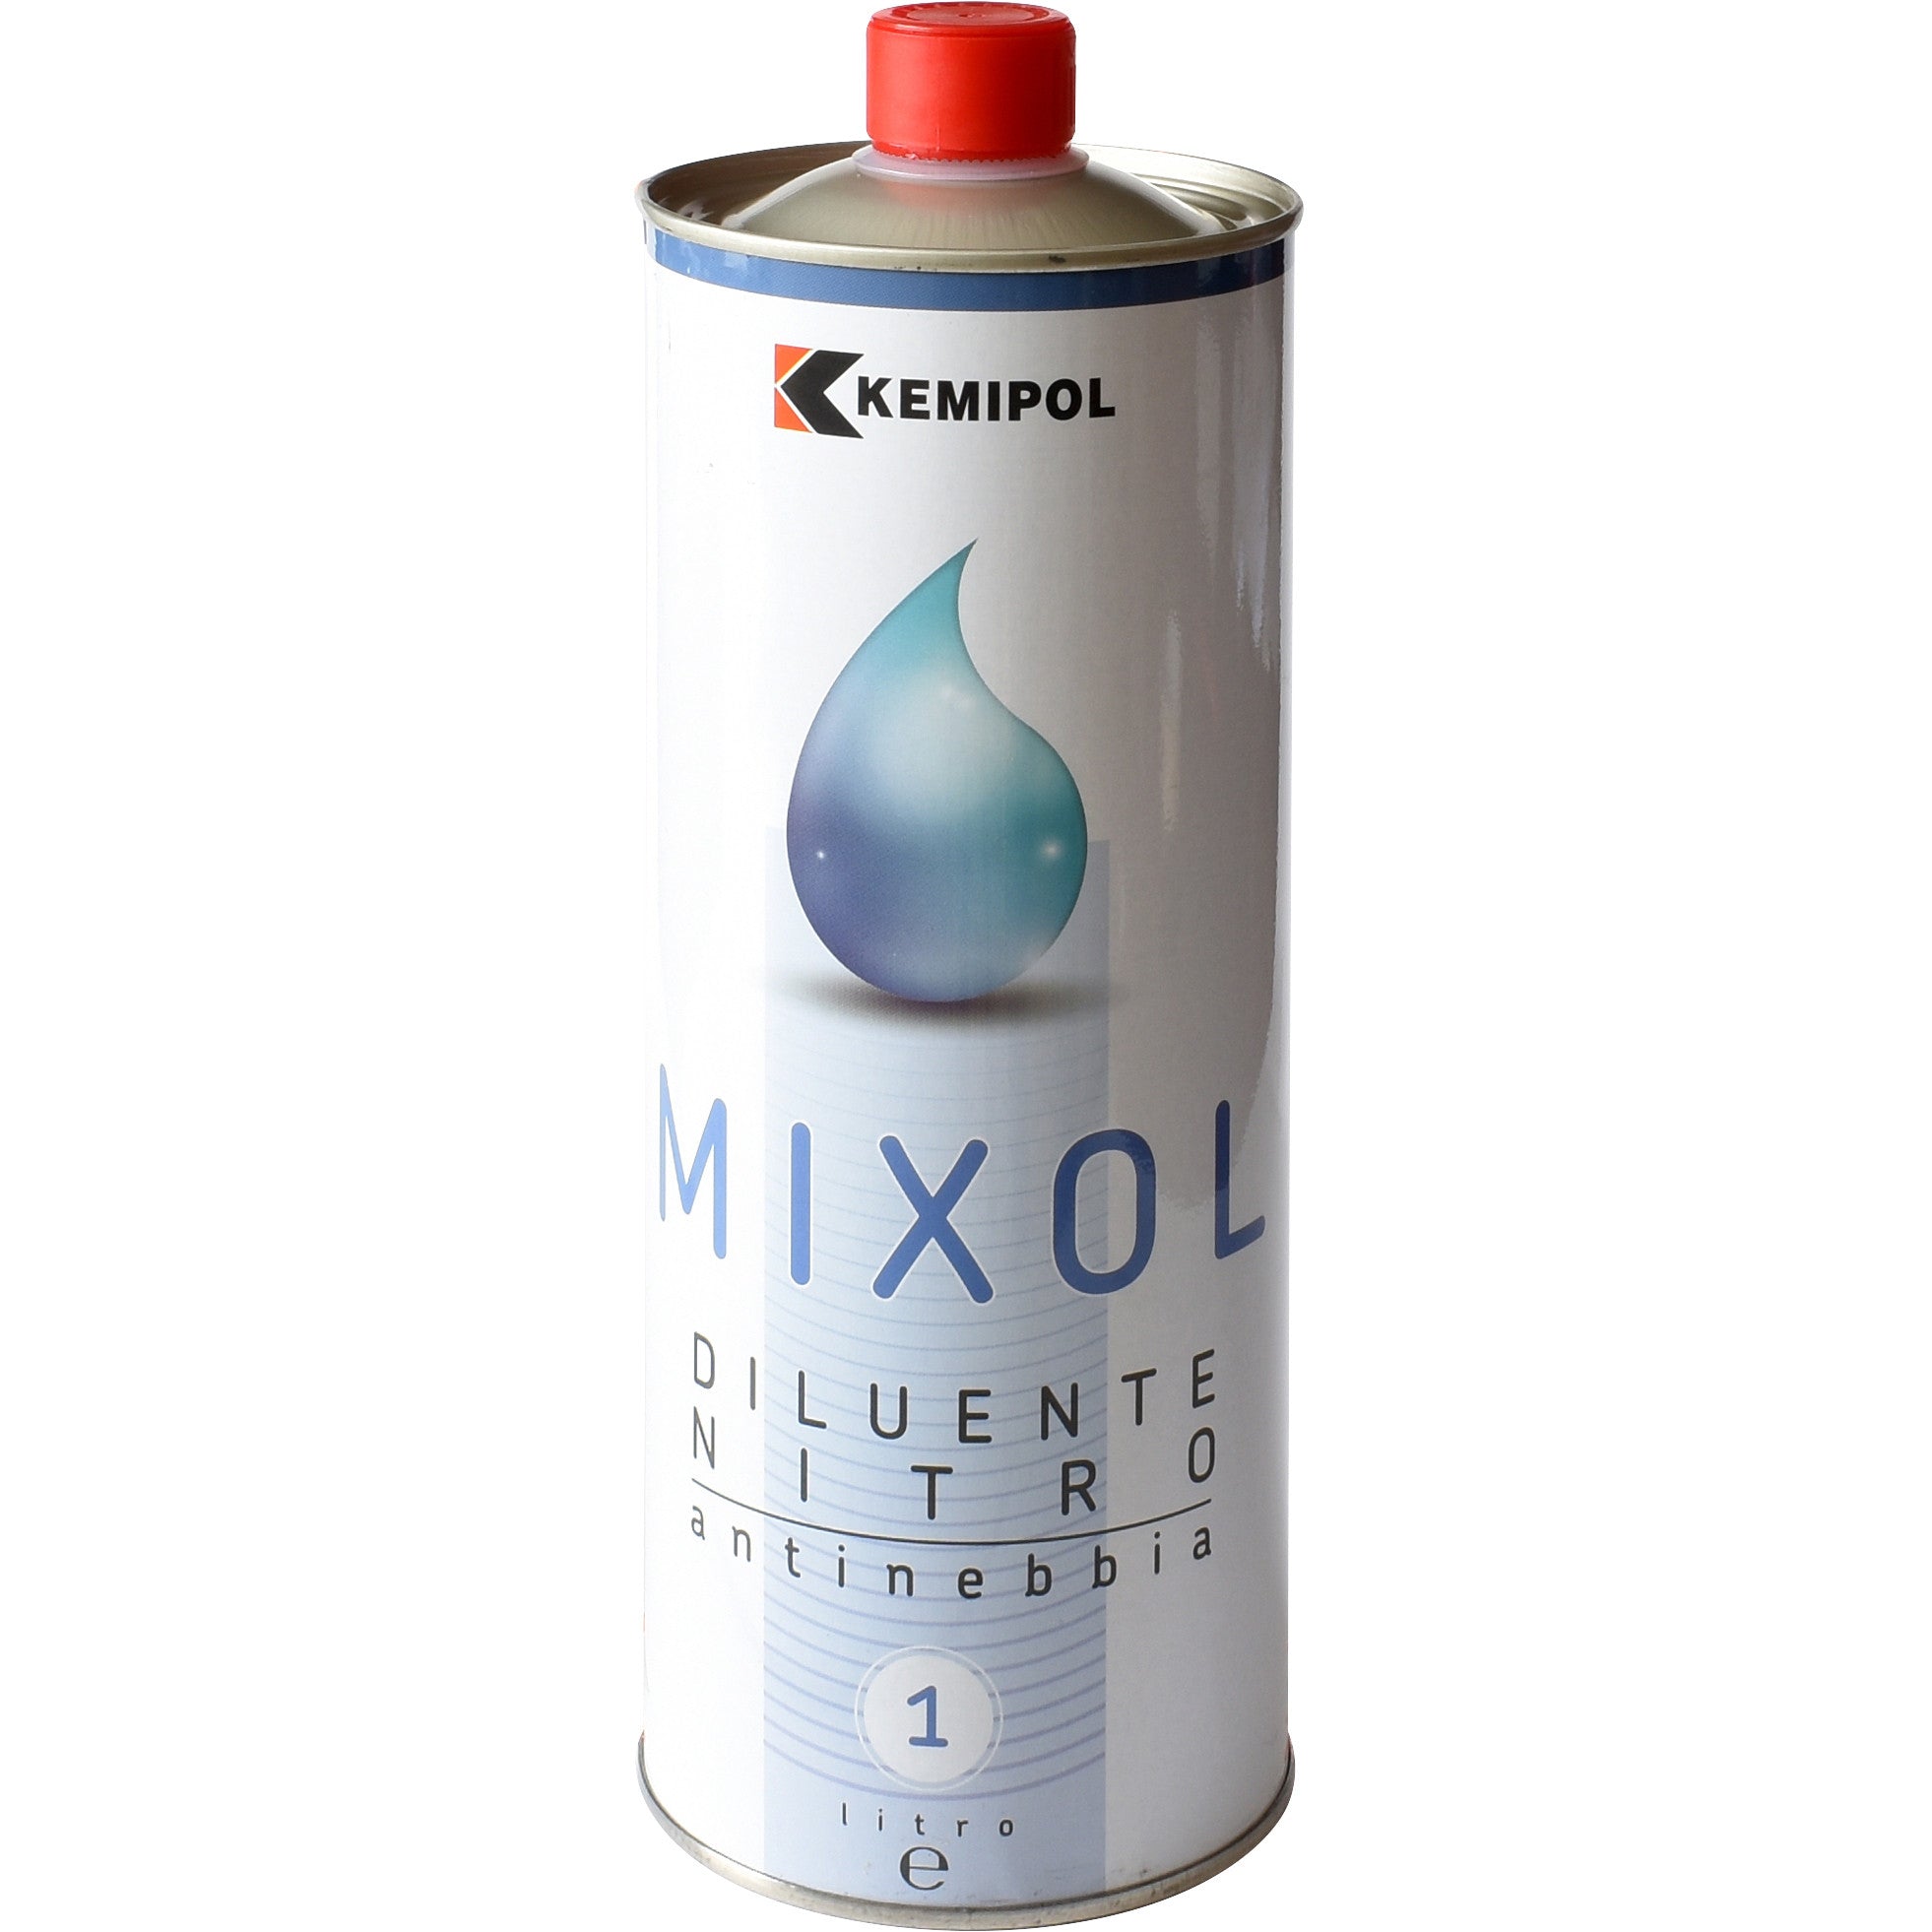 Diluente nitro mixol lt. 1